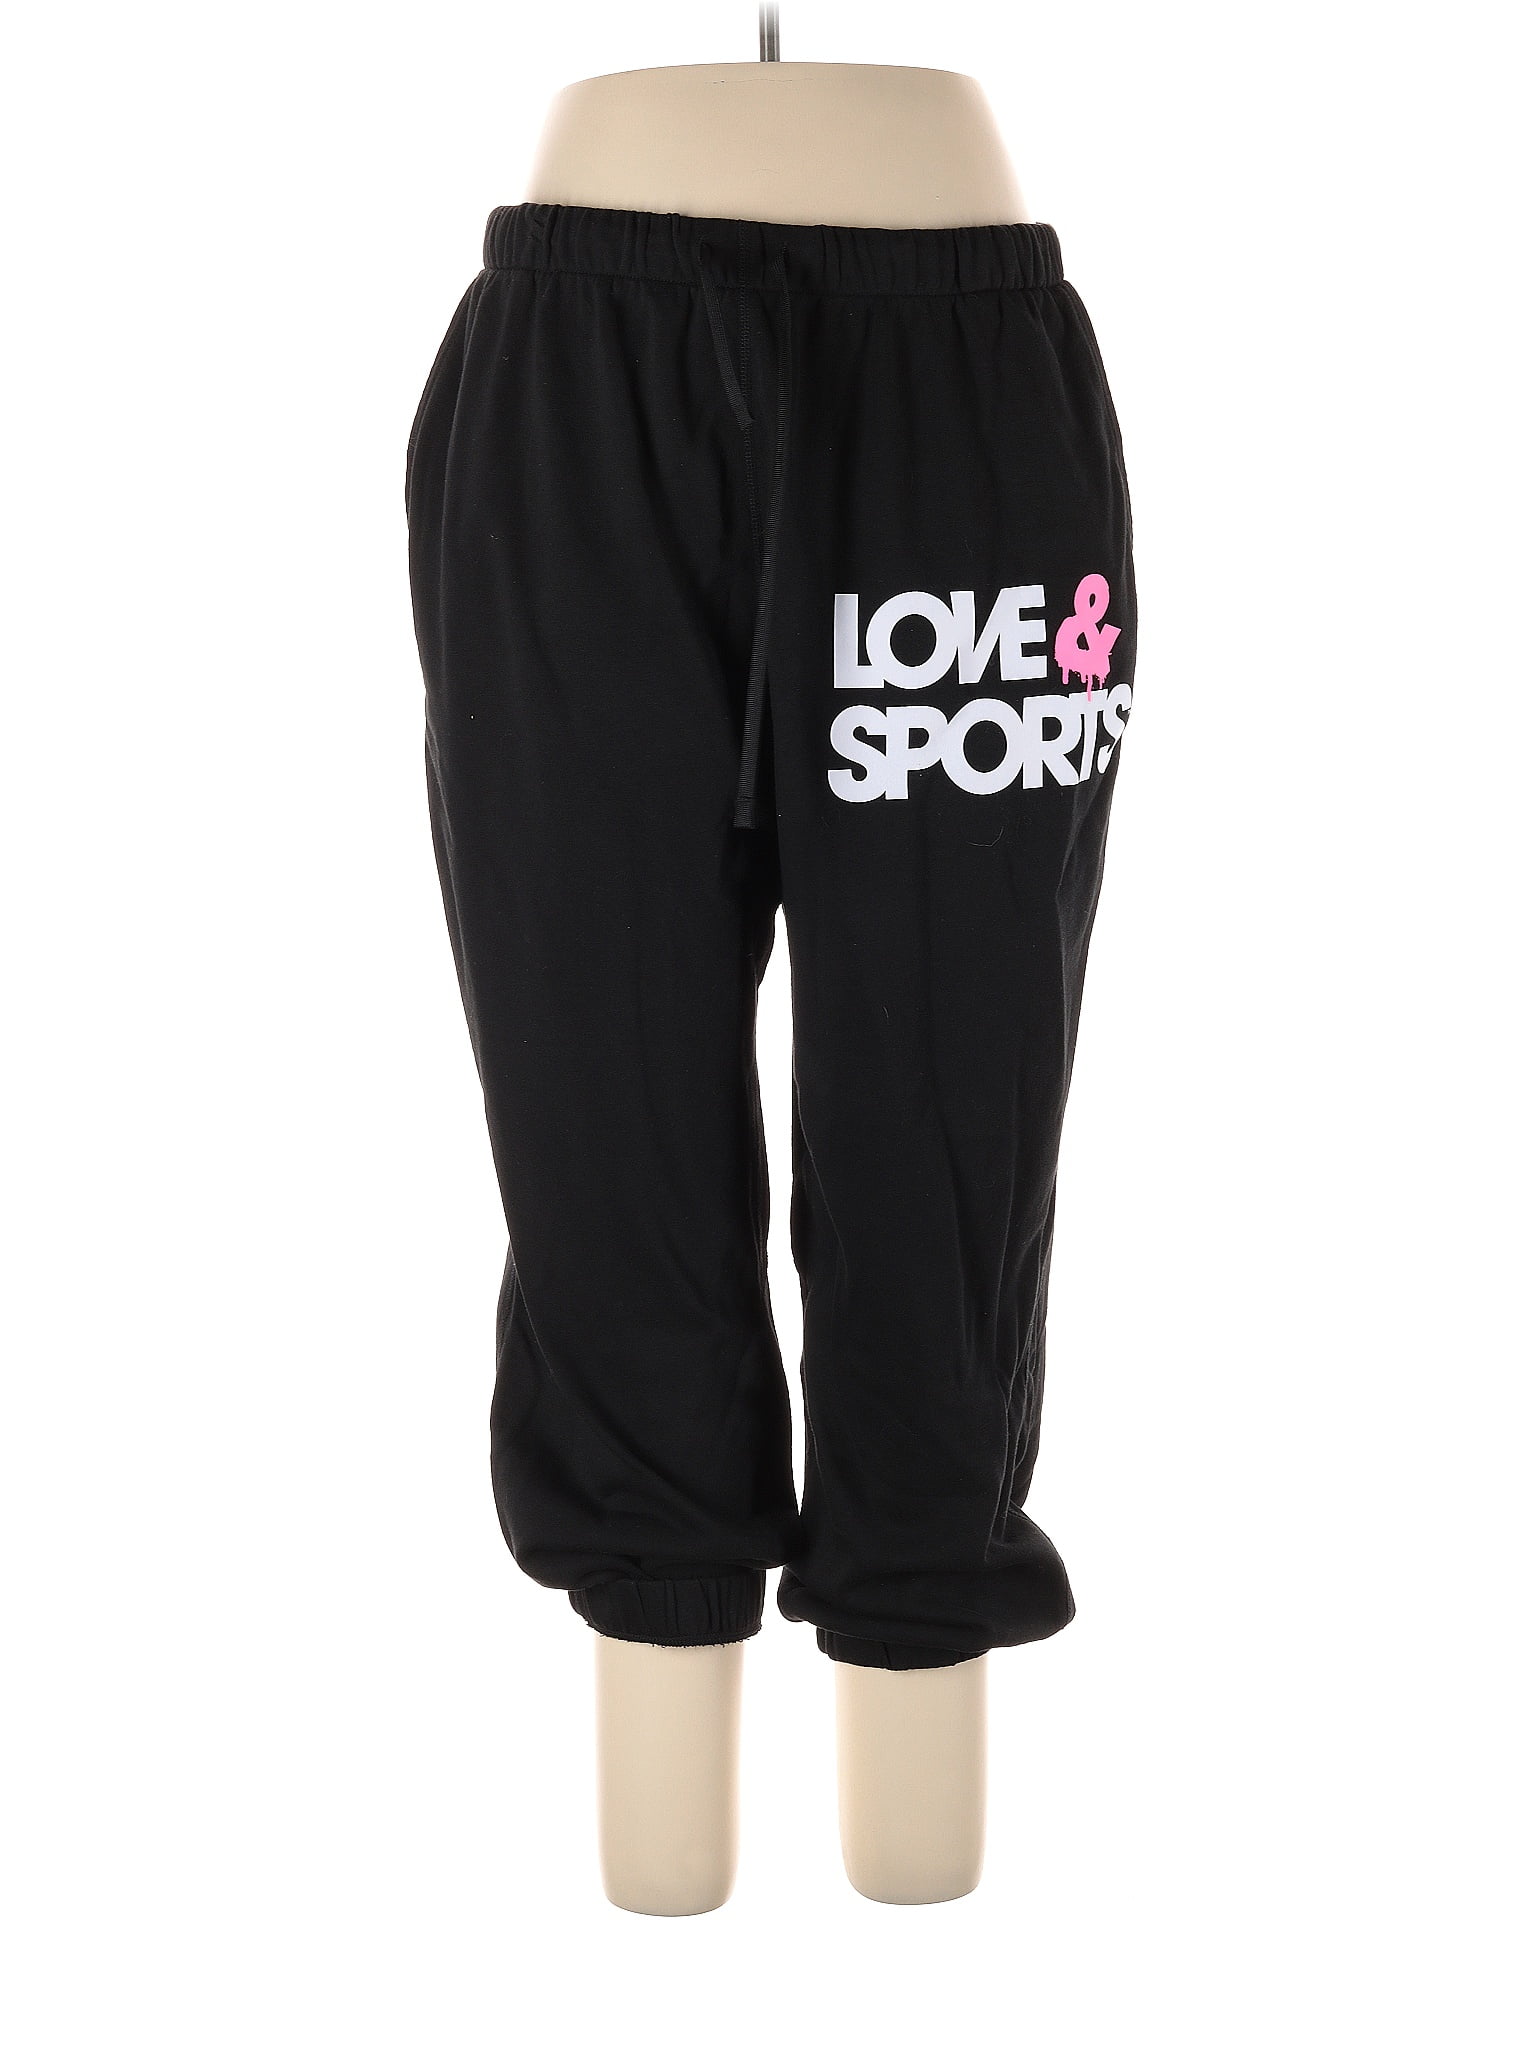 Fashion Nova Solid Black Yoga Pants Size L - 47% off